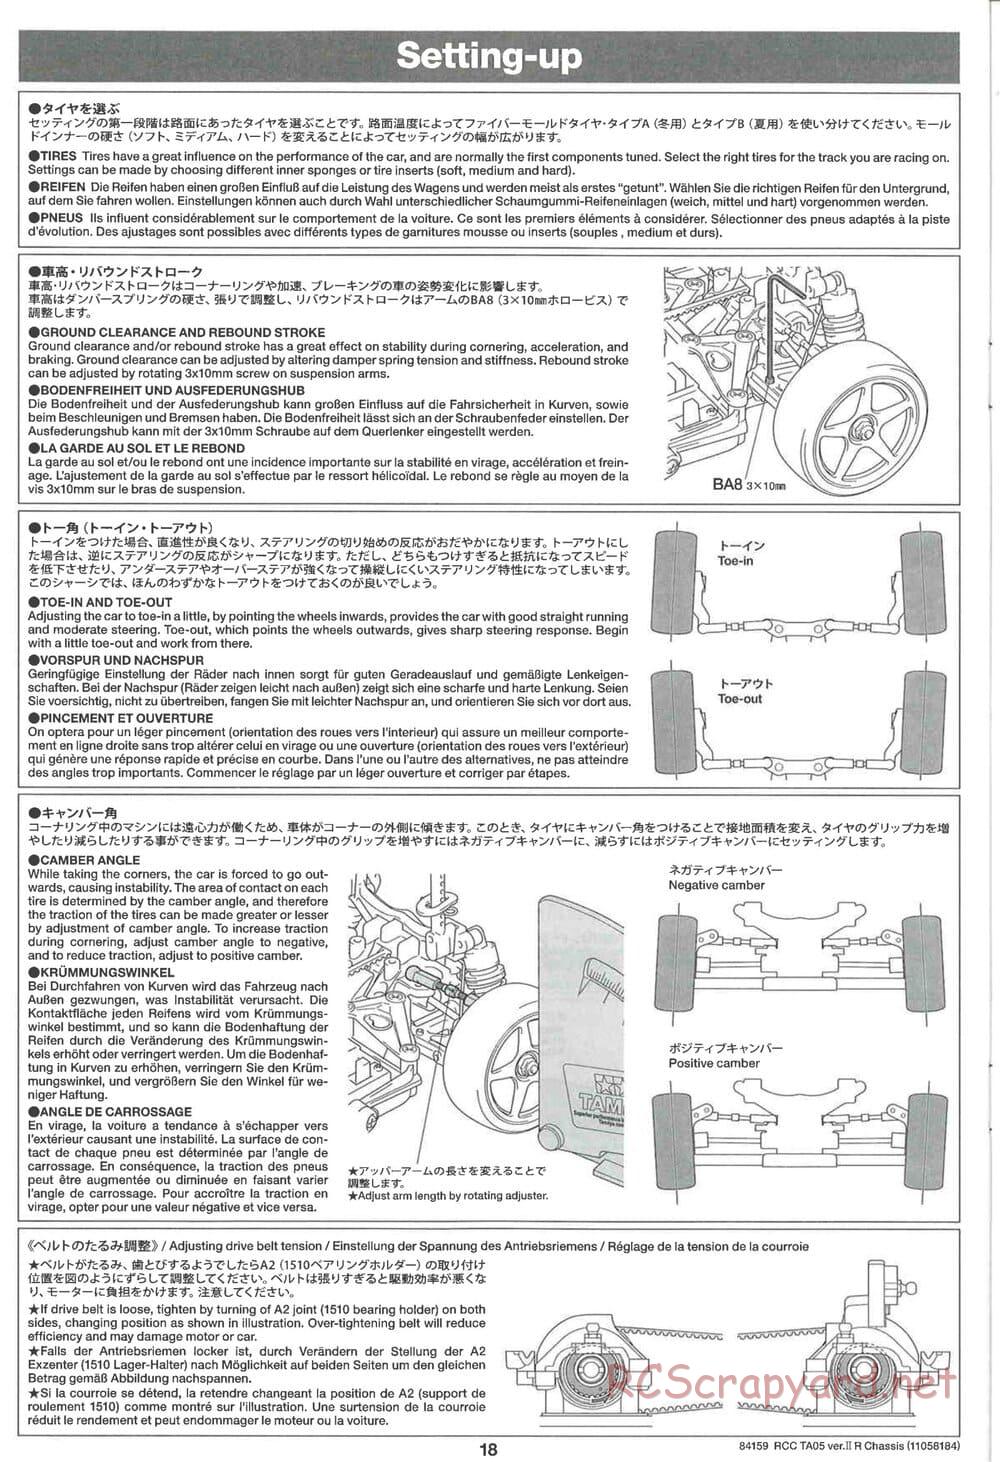 Tamiya - TA05 Ver.II R Chassis - Manual - Page 18